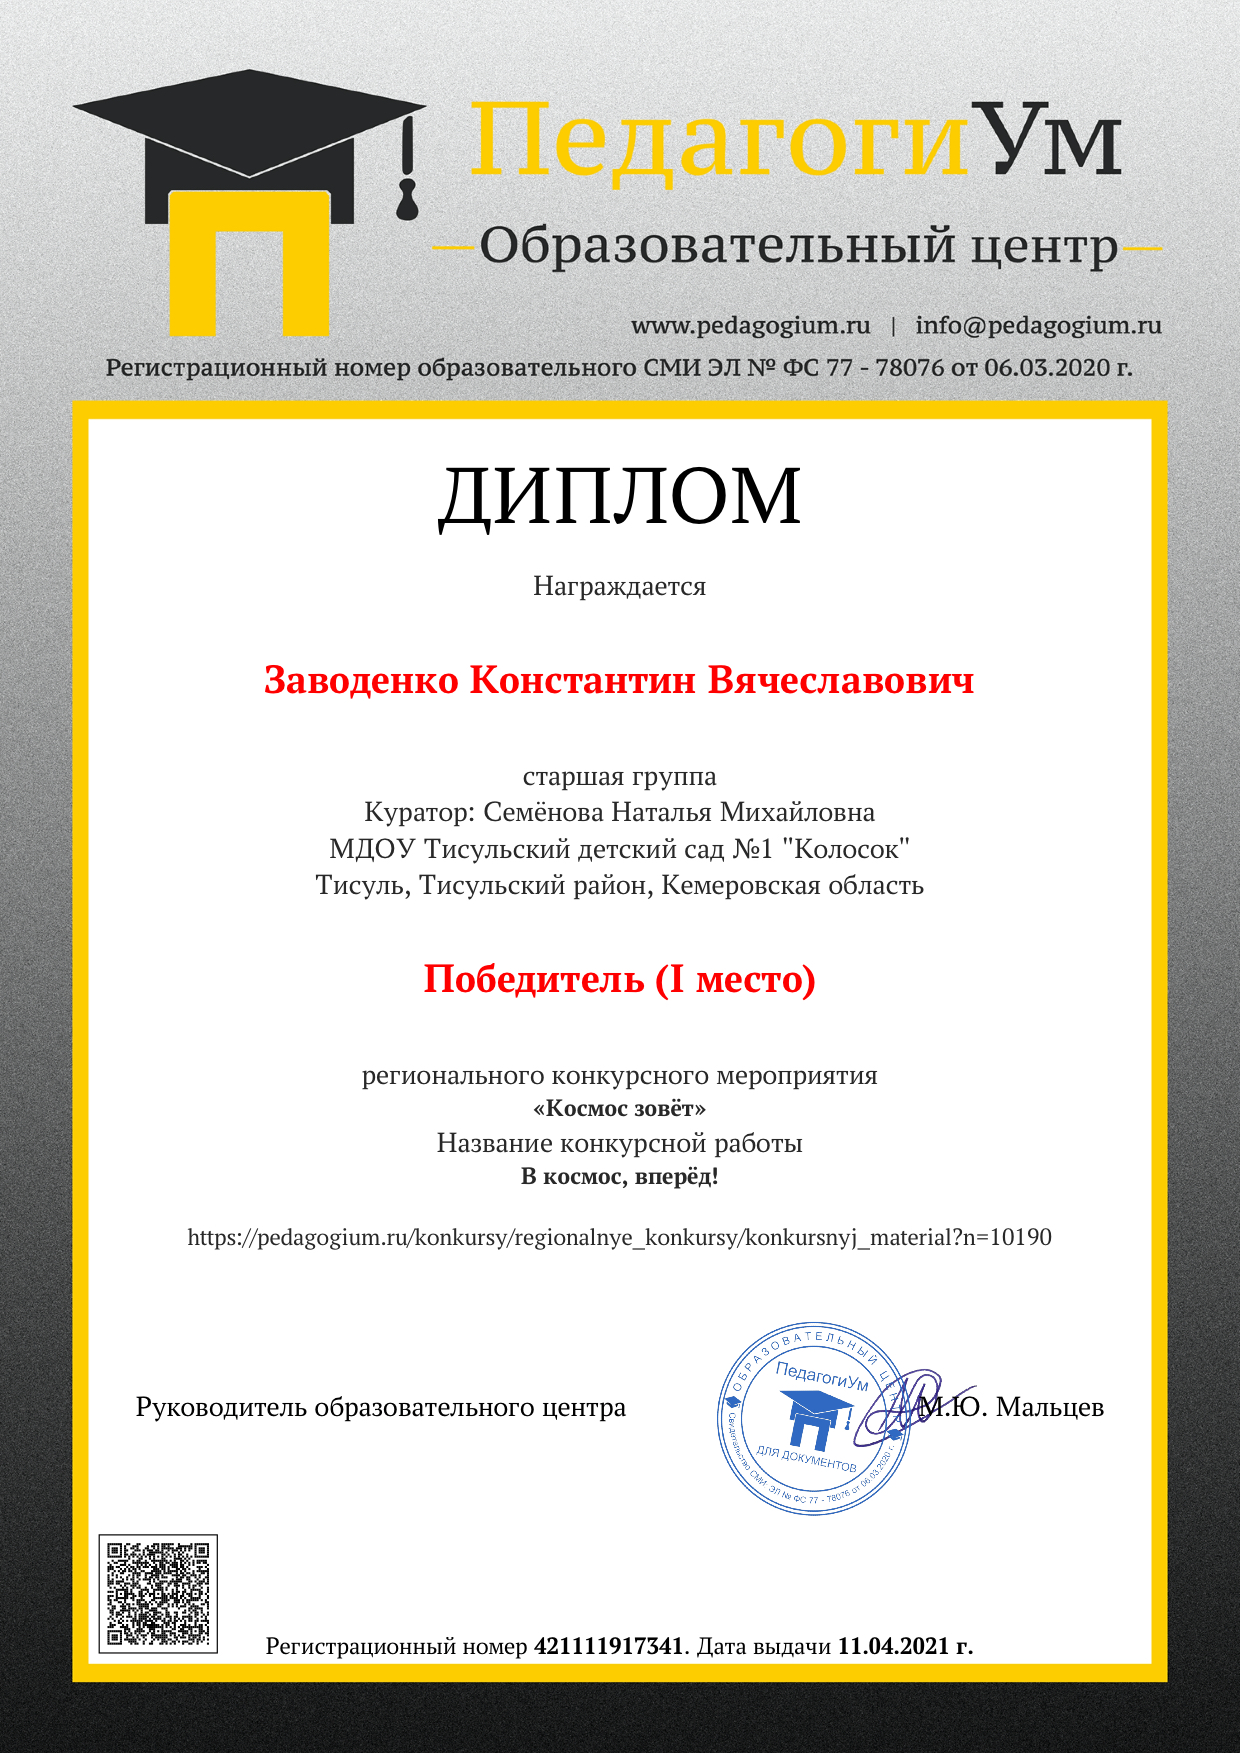 Образец документа воспитаннику-участнику регионального конкурса центра ПедагогиУм.